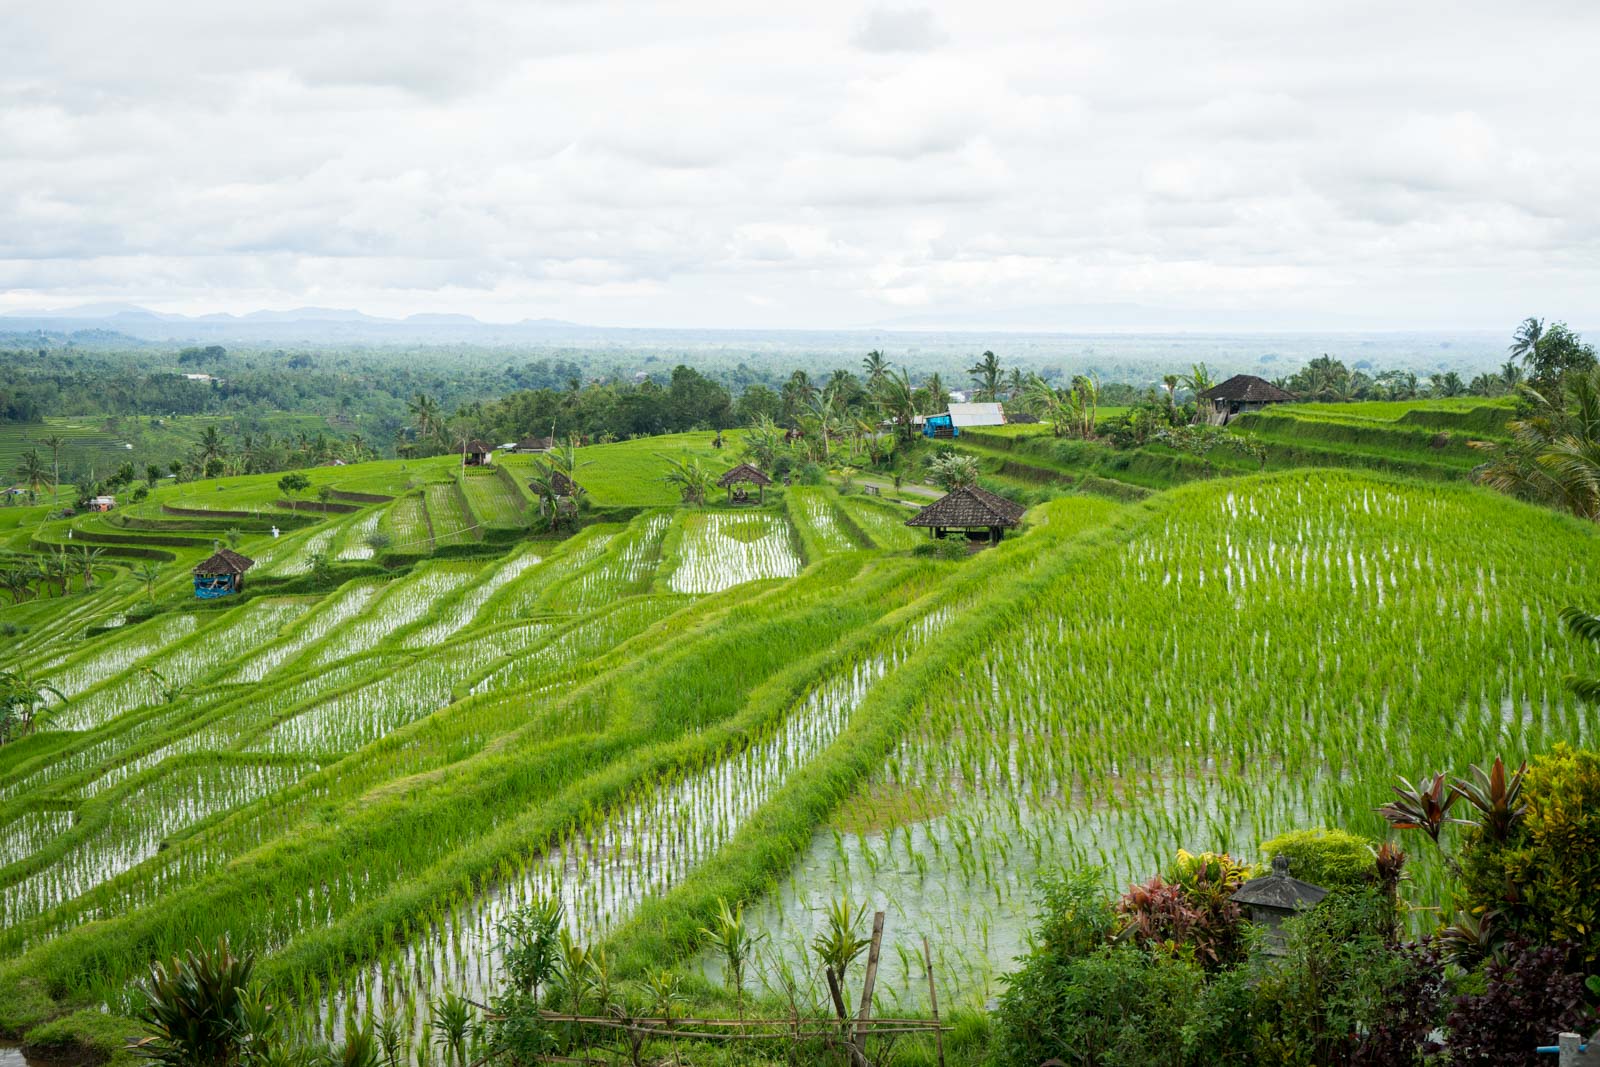 Visiting Jatiluwih Rice Terraces and Bali's Cultural Landscape